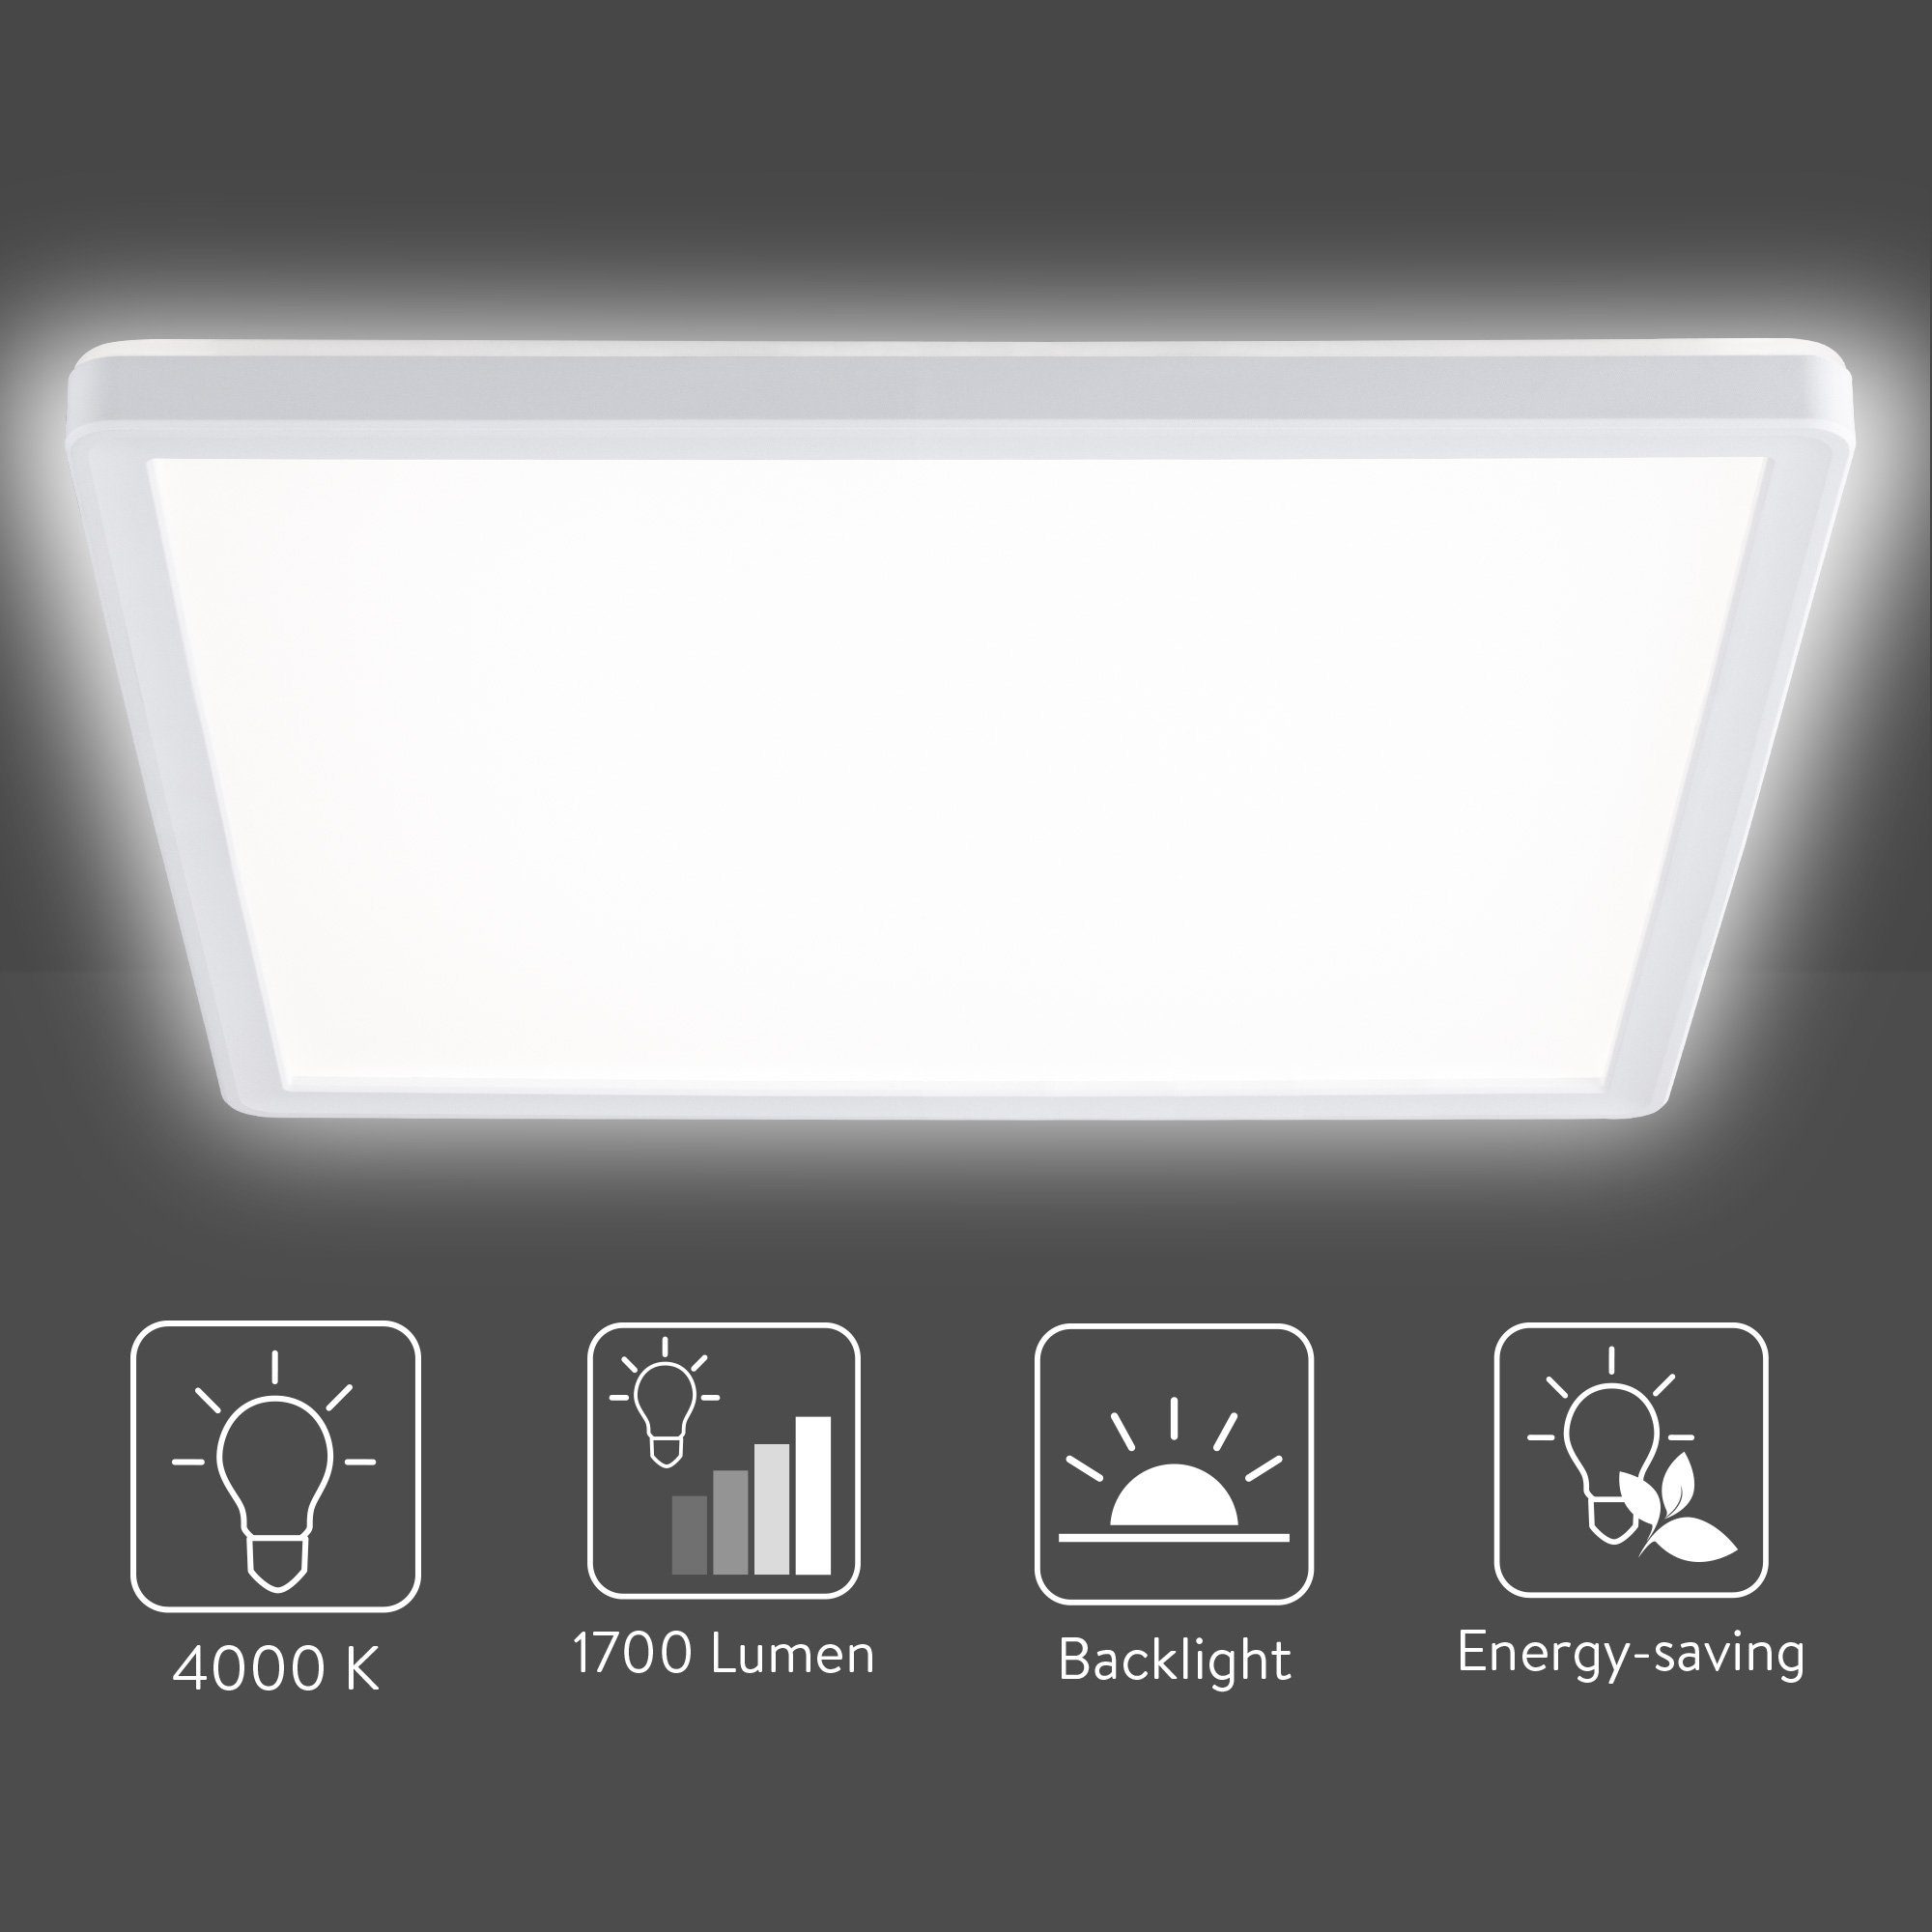 Navaris LED Deckenleuchte, LED integriert, - ultra Hintergrundbeleuchtung 18 flach LED - Deckenlampe mit Watt fest